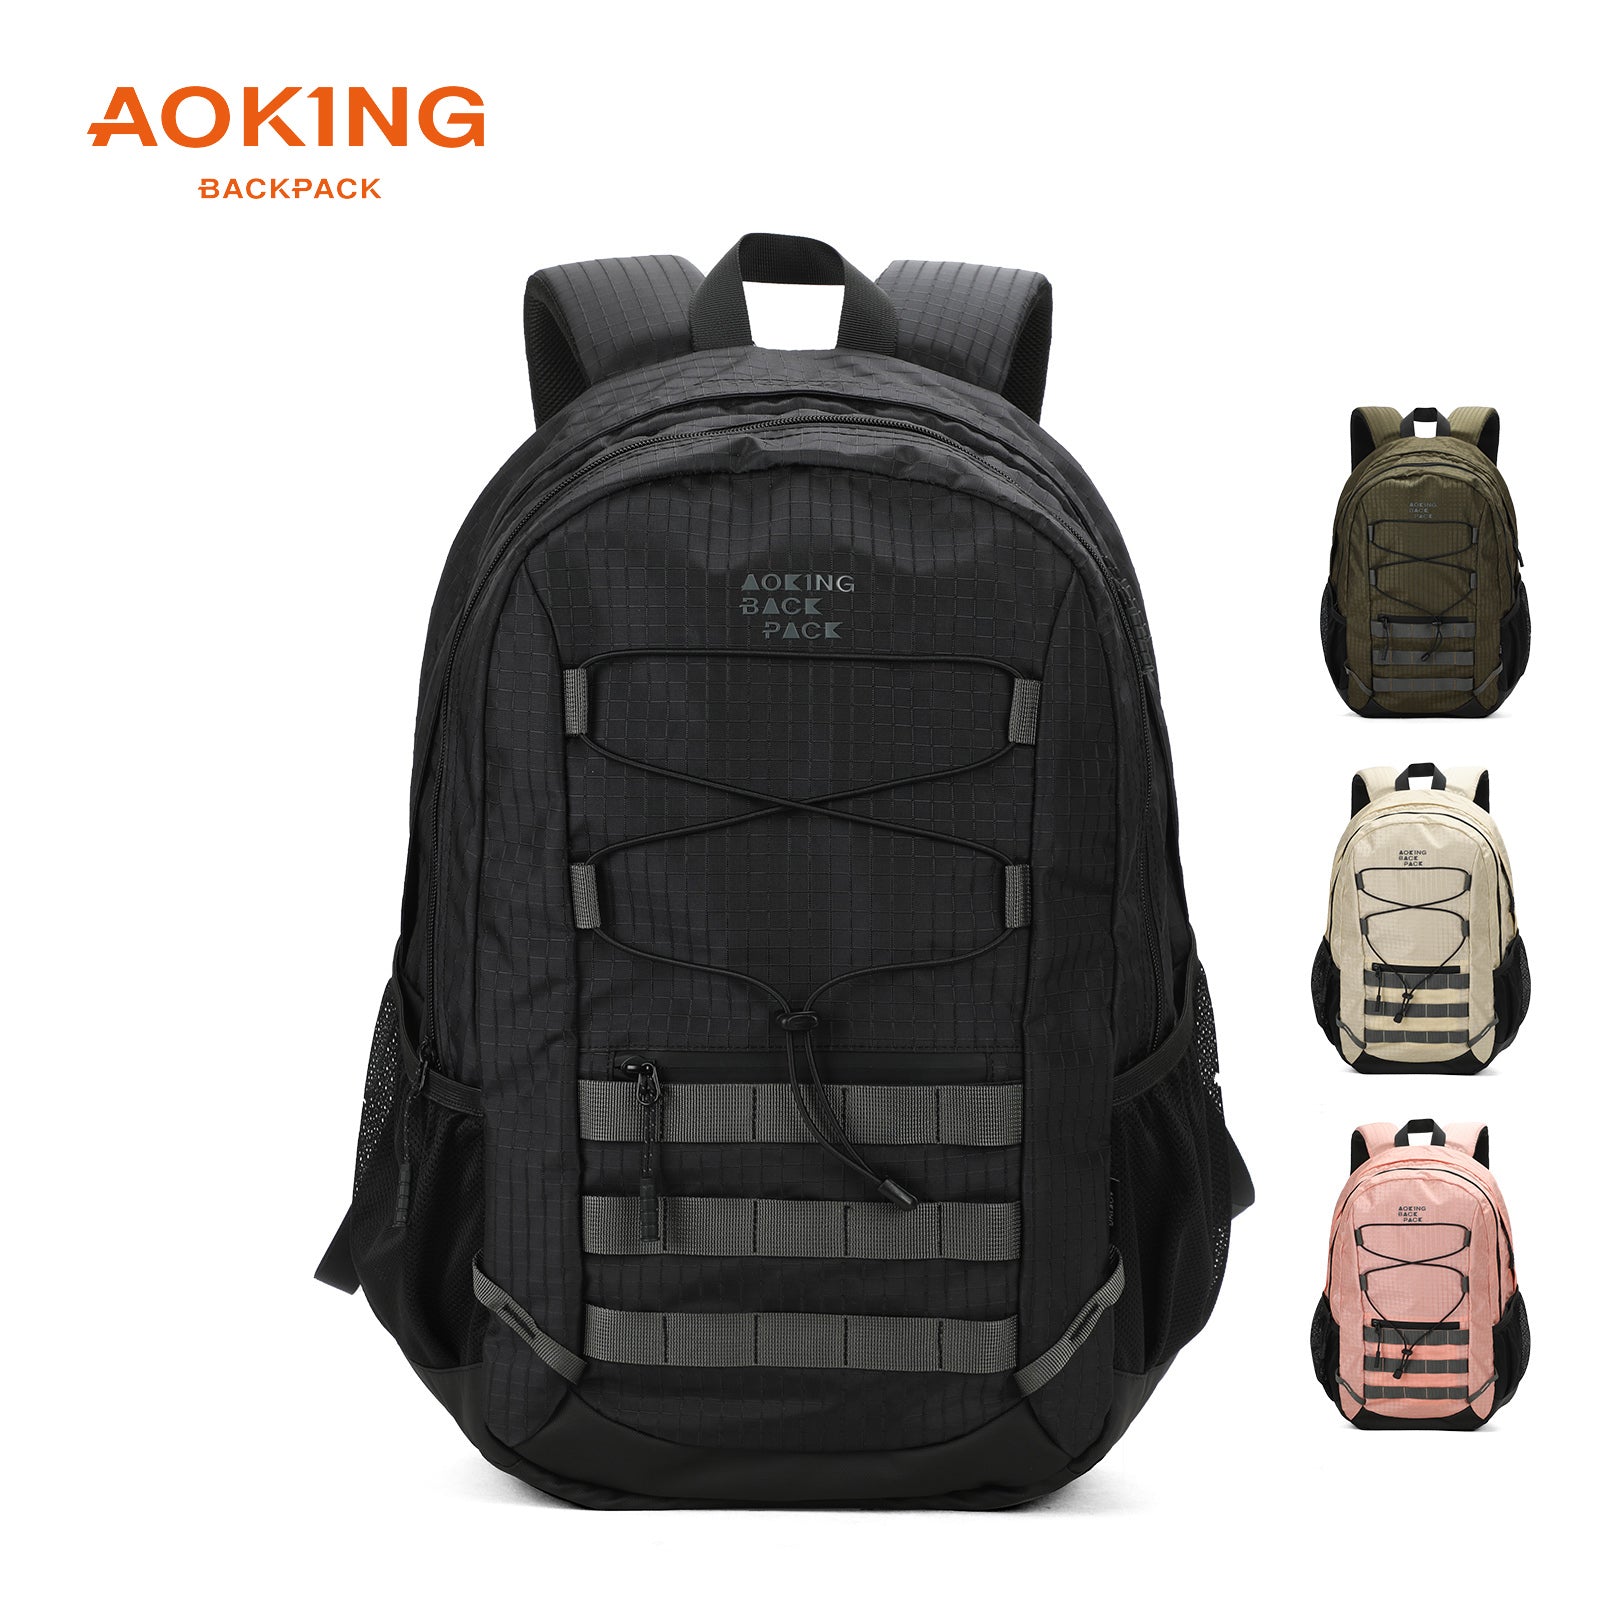 Aoking Backpack Black Casual Backpack Student Bag XN3378